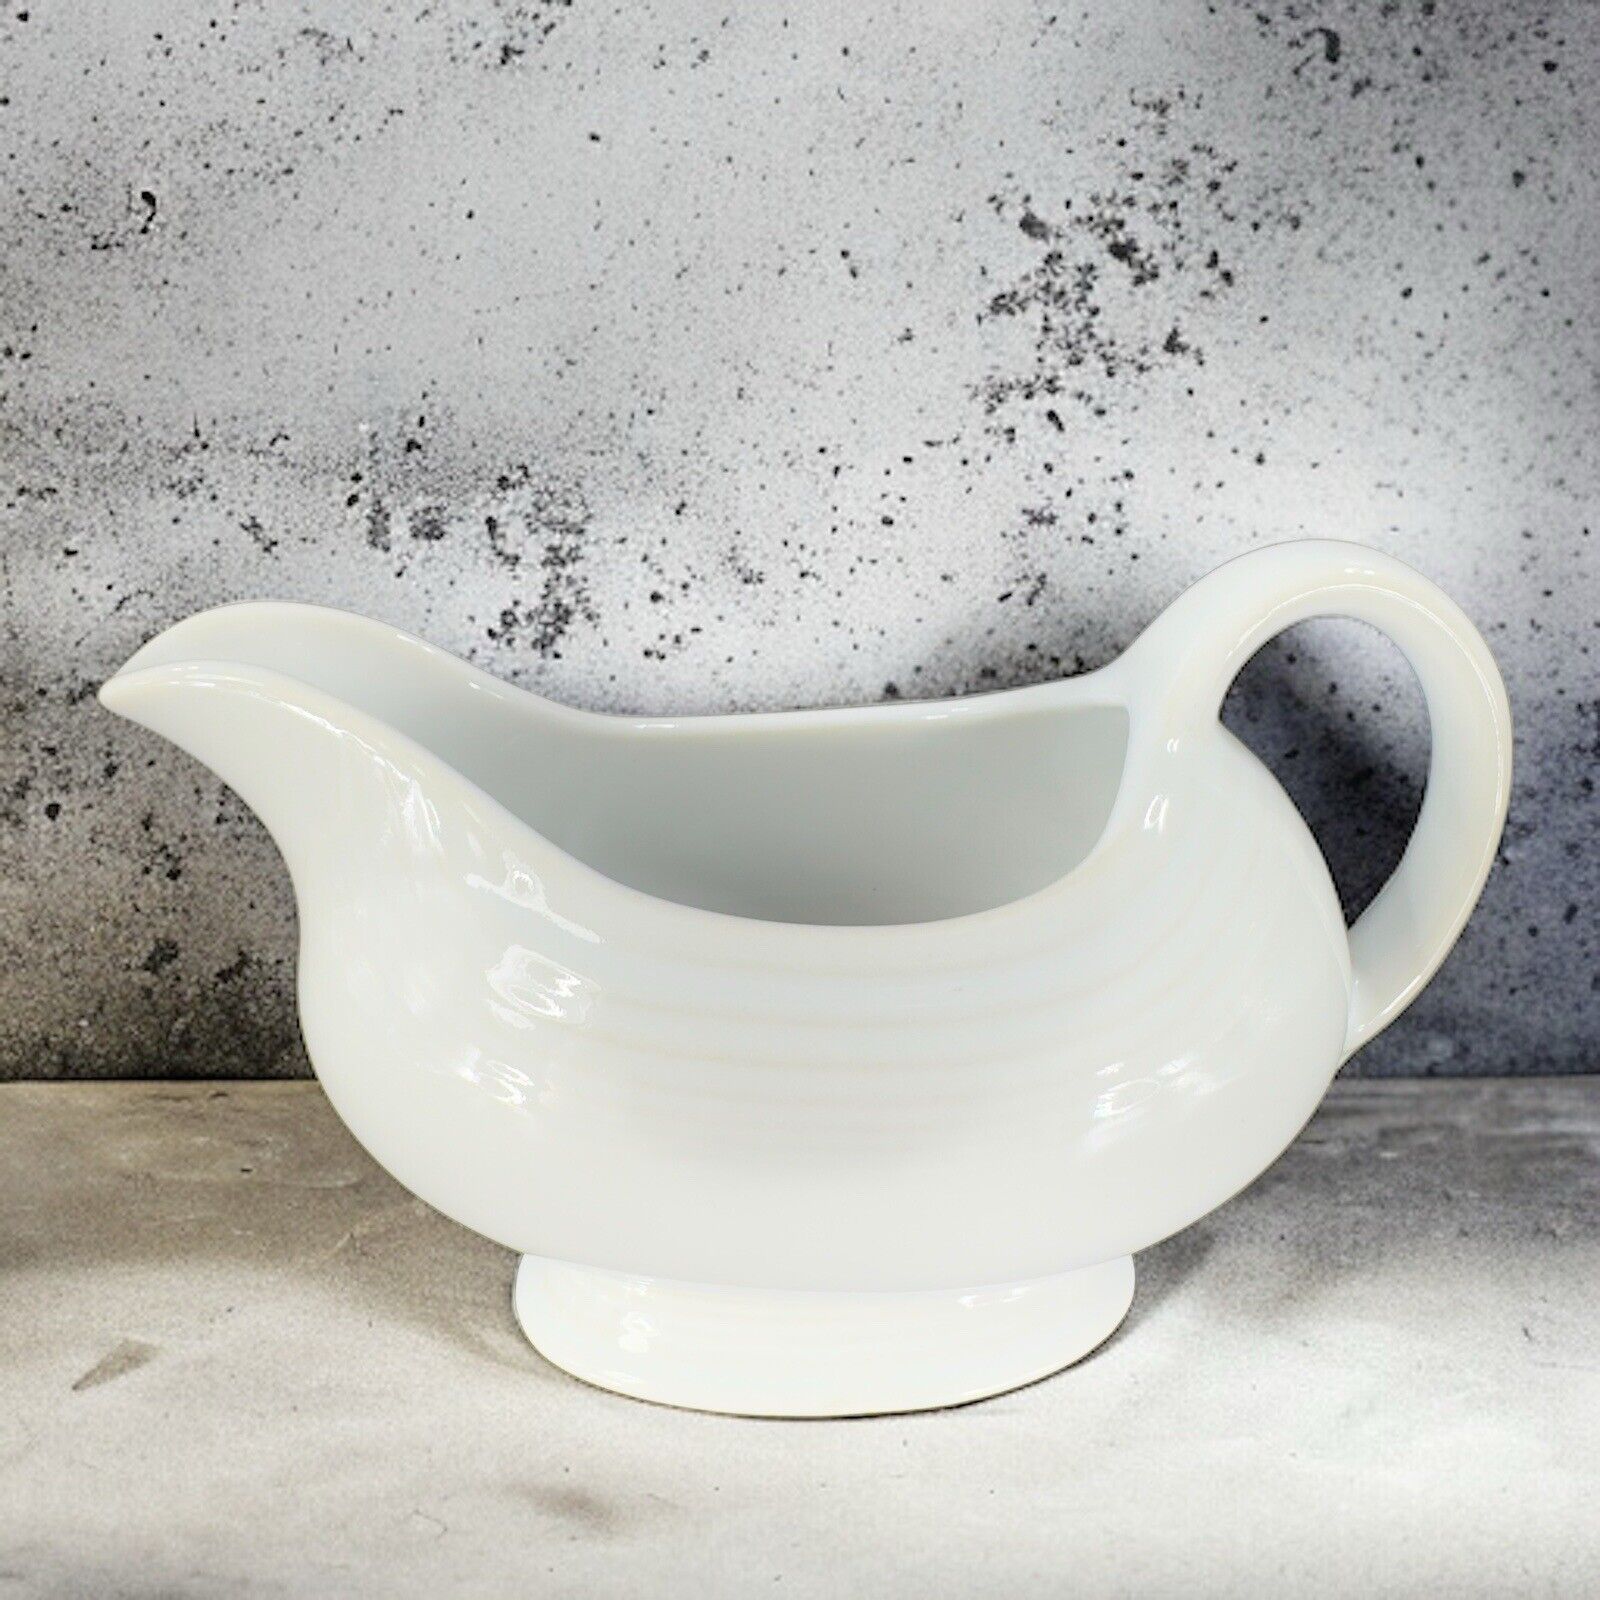 Vintage Fiesta Ware Ceramic White Pottery Gravy Boat Marked On Bottom USA